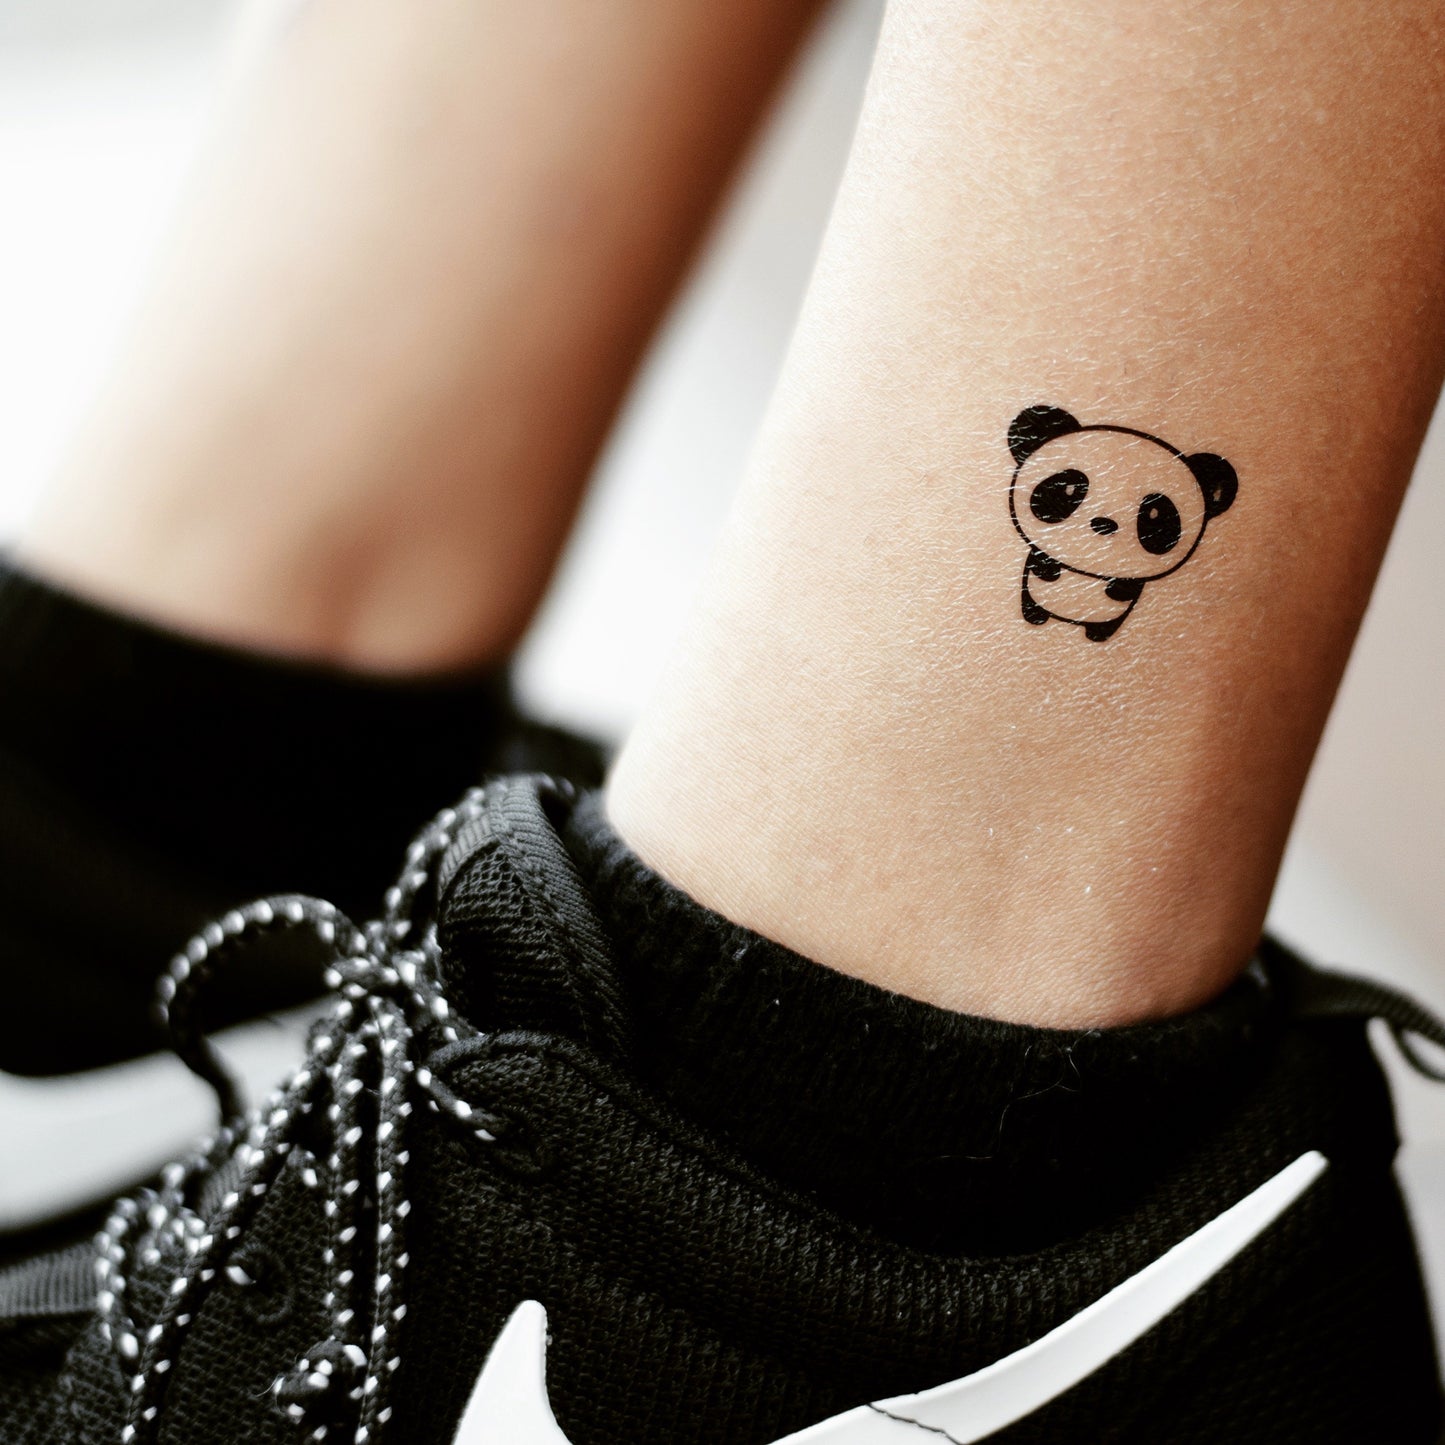 fake small cute kawaii cartoon panda animal temporary tattoo sticker design idea on ankle